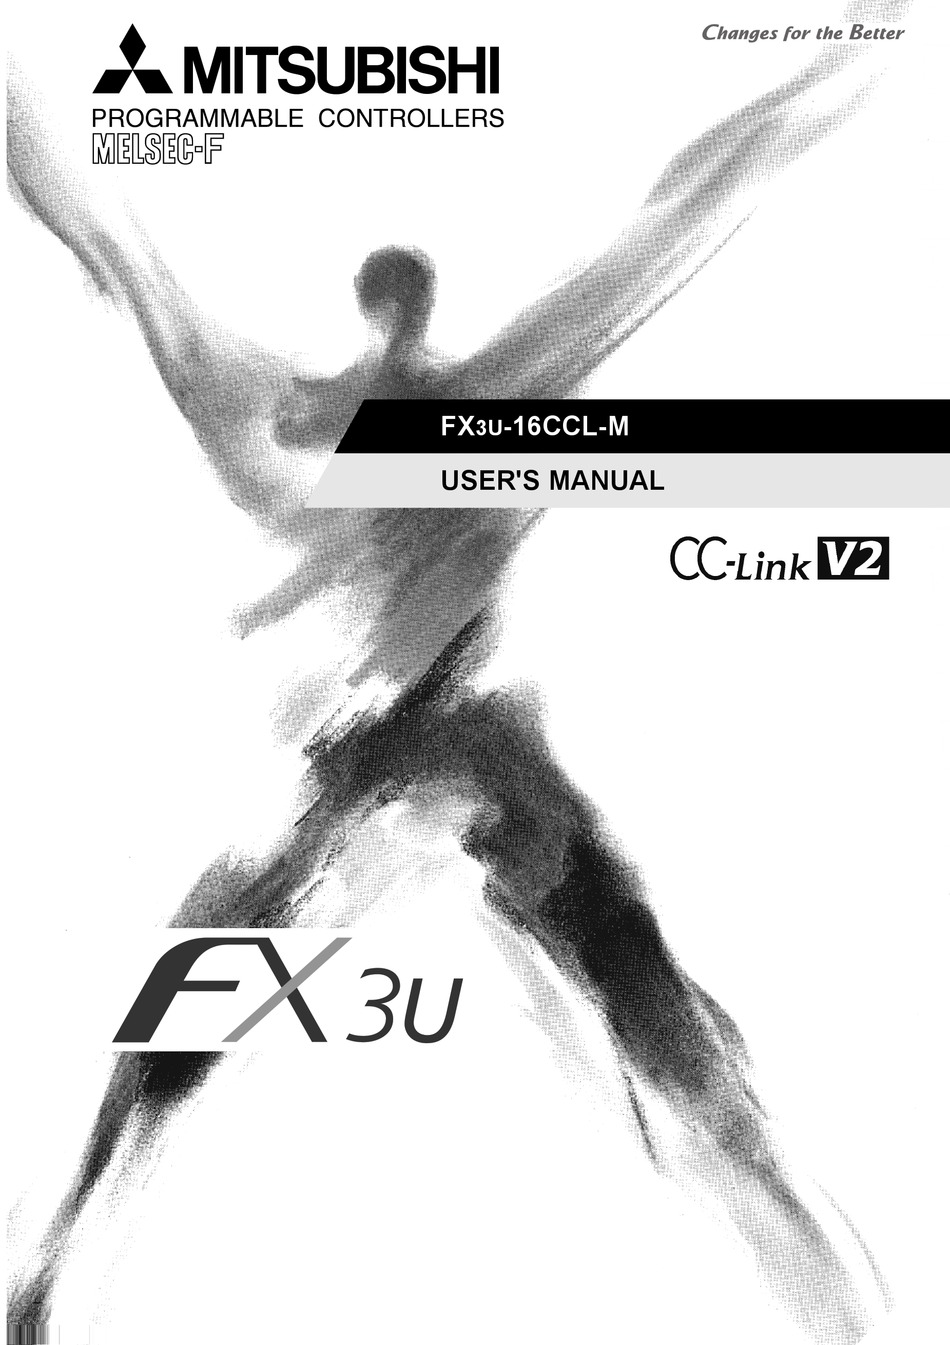 MITSUBISHI FX3U USER MANUAL Pdf Download | ManualsLib